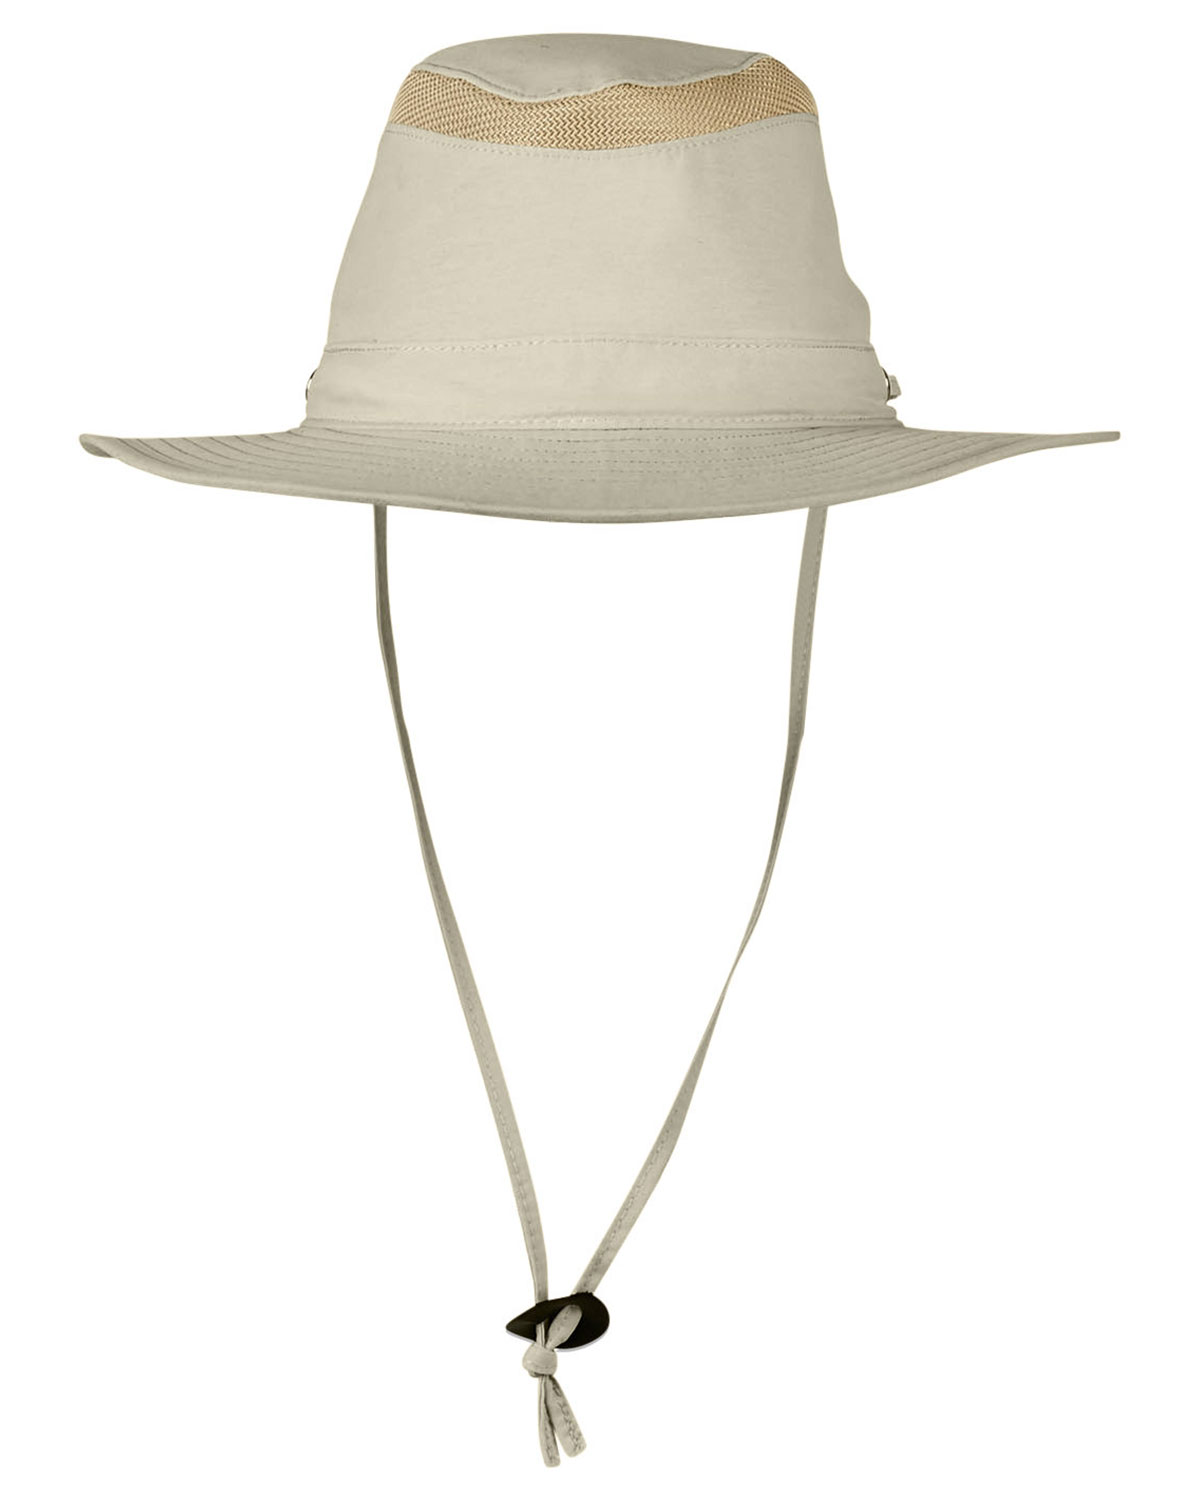 Adams OB101 Outback Brimmed Hat at Apparelstation